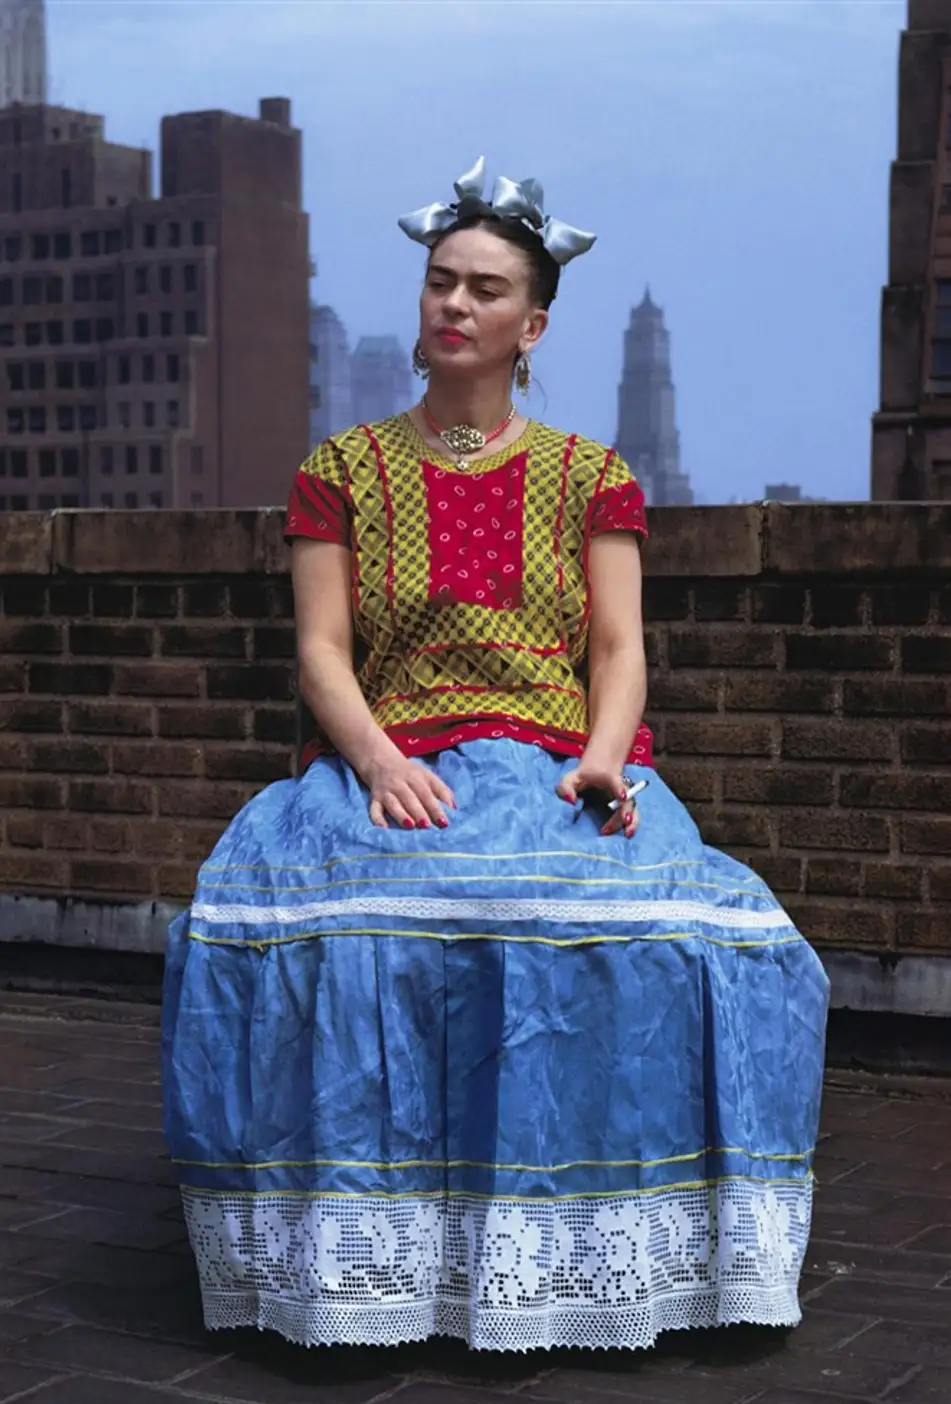 Wie is Frida Kahlo?